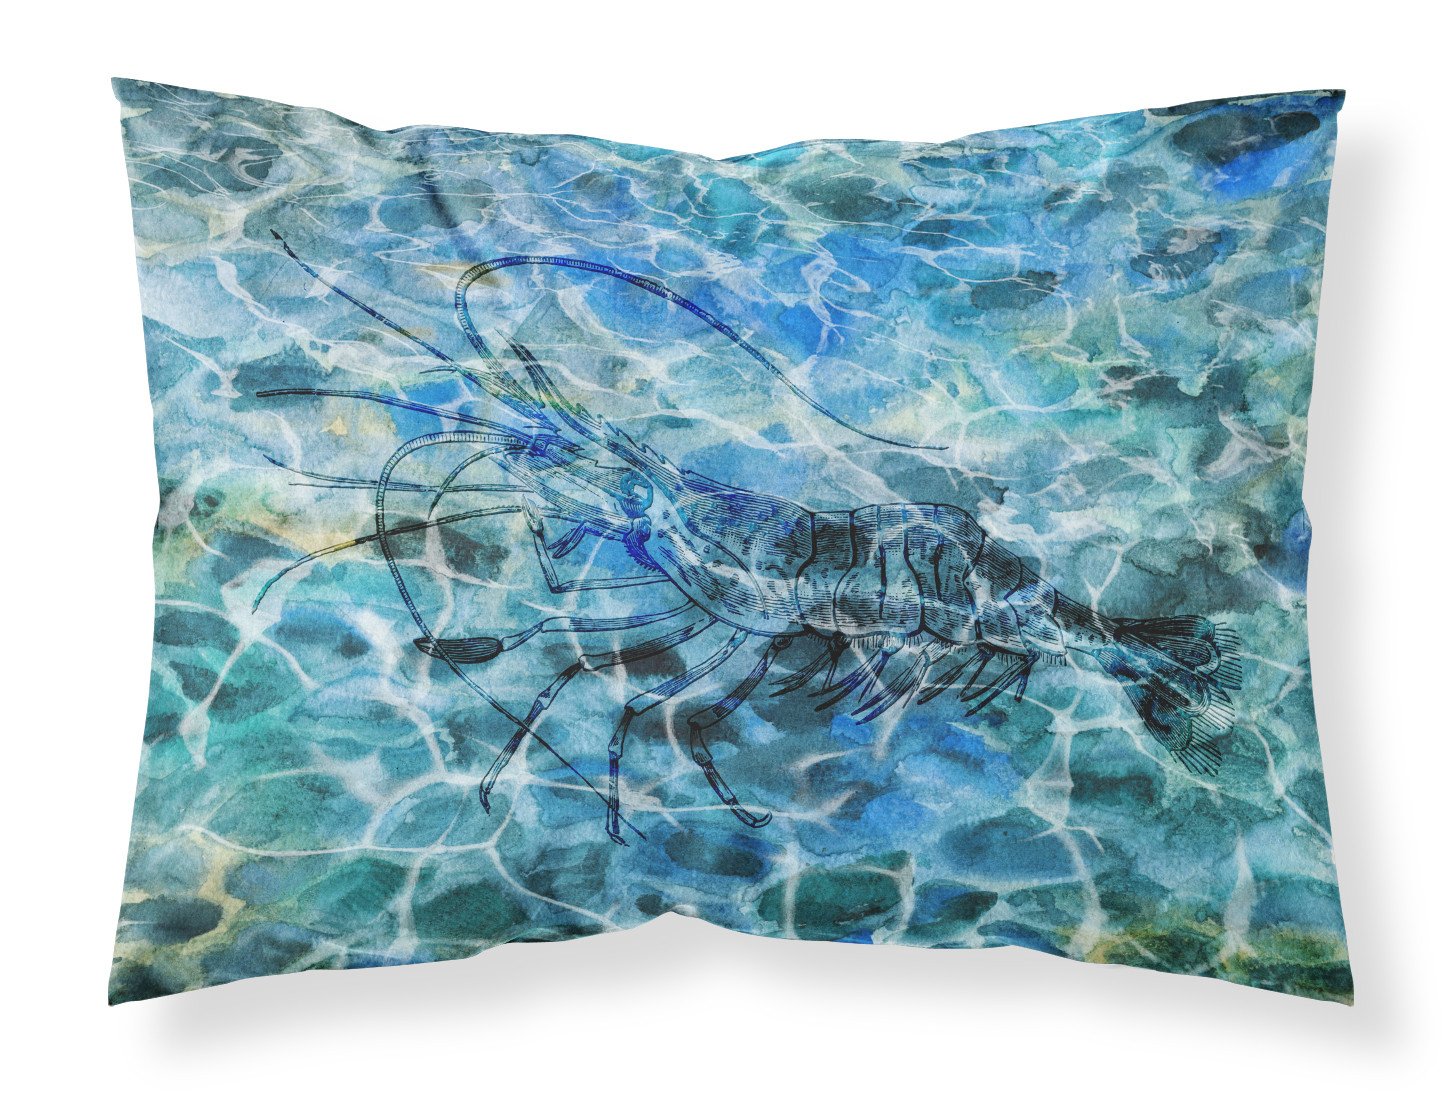 Shrimp Under water Fabric Standard Pillowcase BB5359PILLOWCASE by Caroline's Treasures